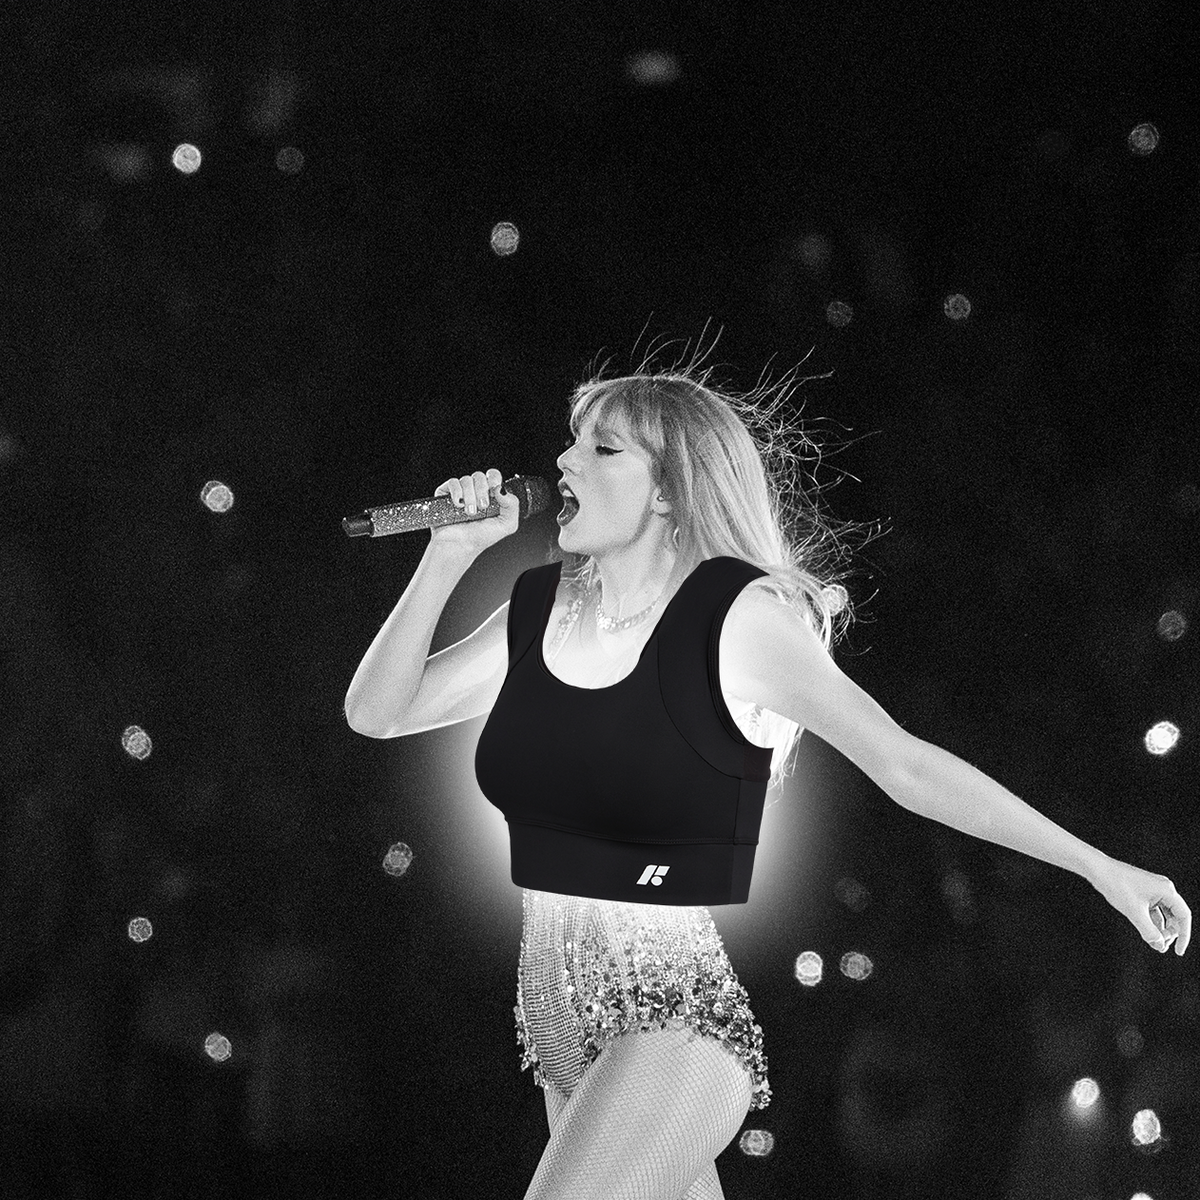 Shop the Sports Bra Taylor Swift Wore During Eras Tour Rehearsals